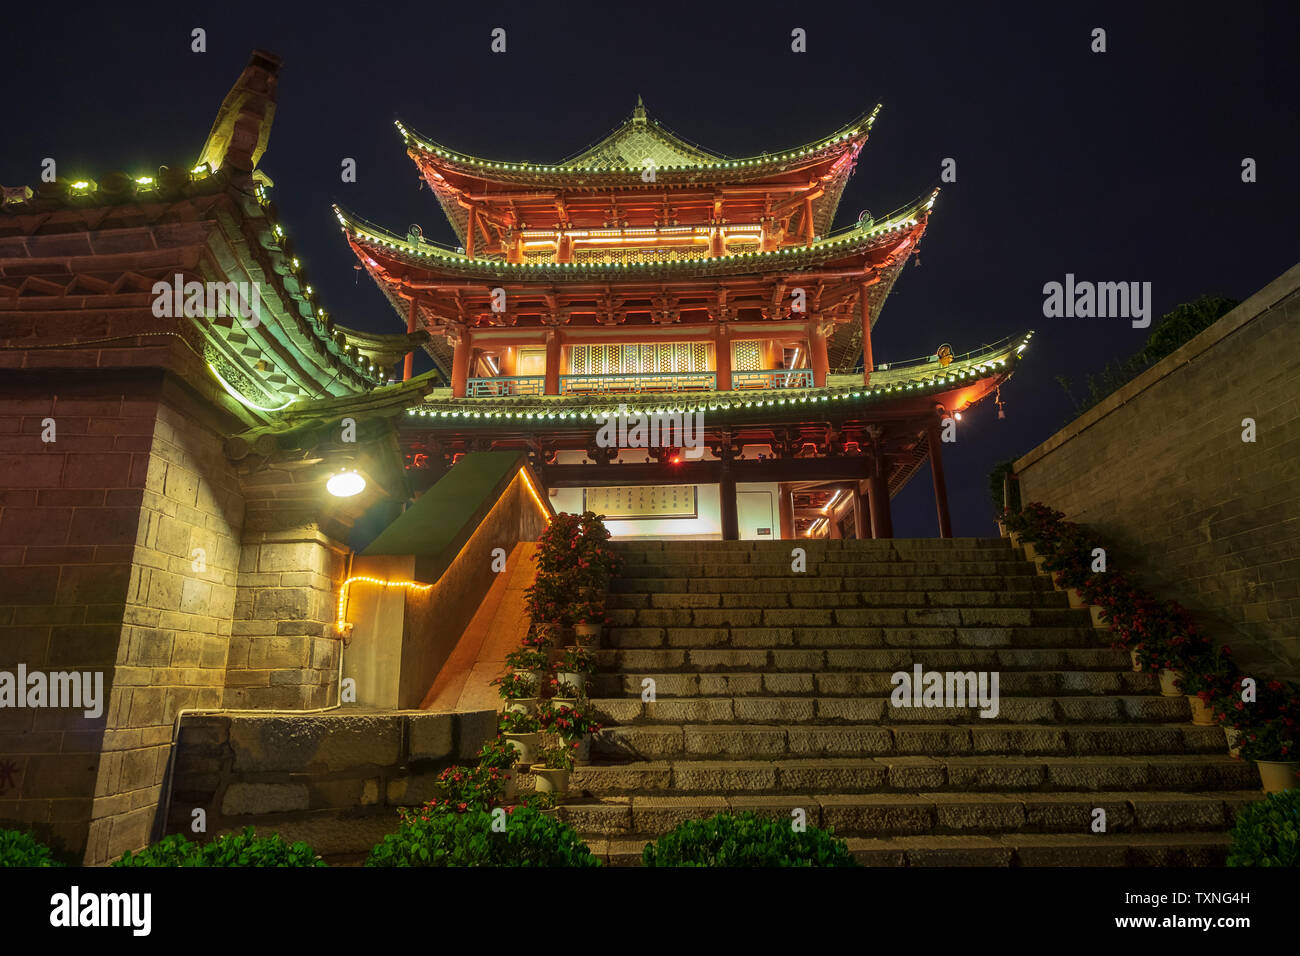 Old city gate, stairway and temple at night, Jianshu County, Hunan Province, China Stock Photo